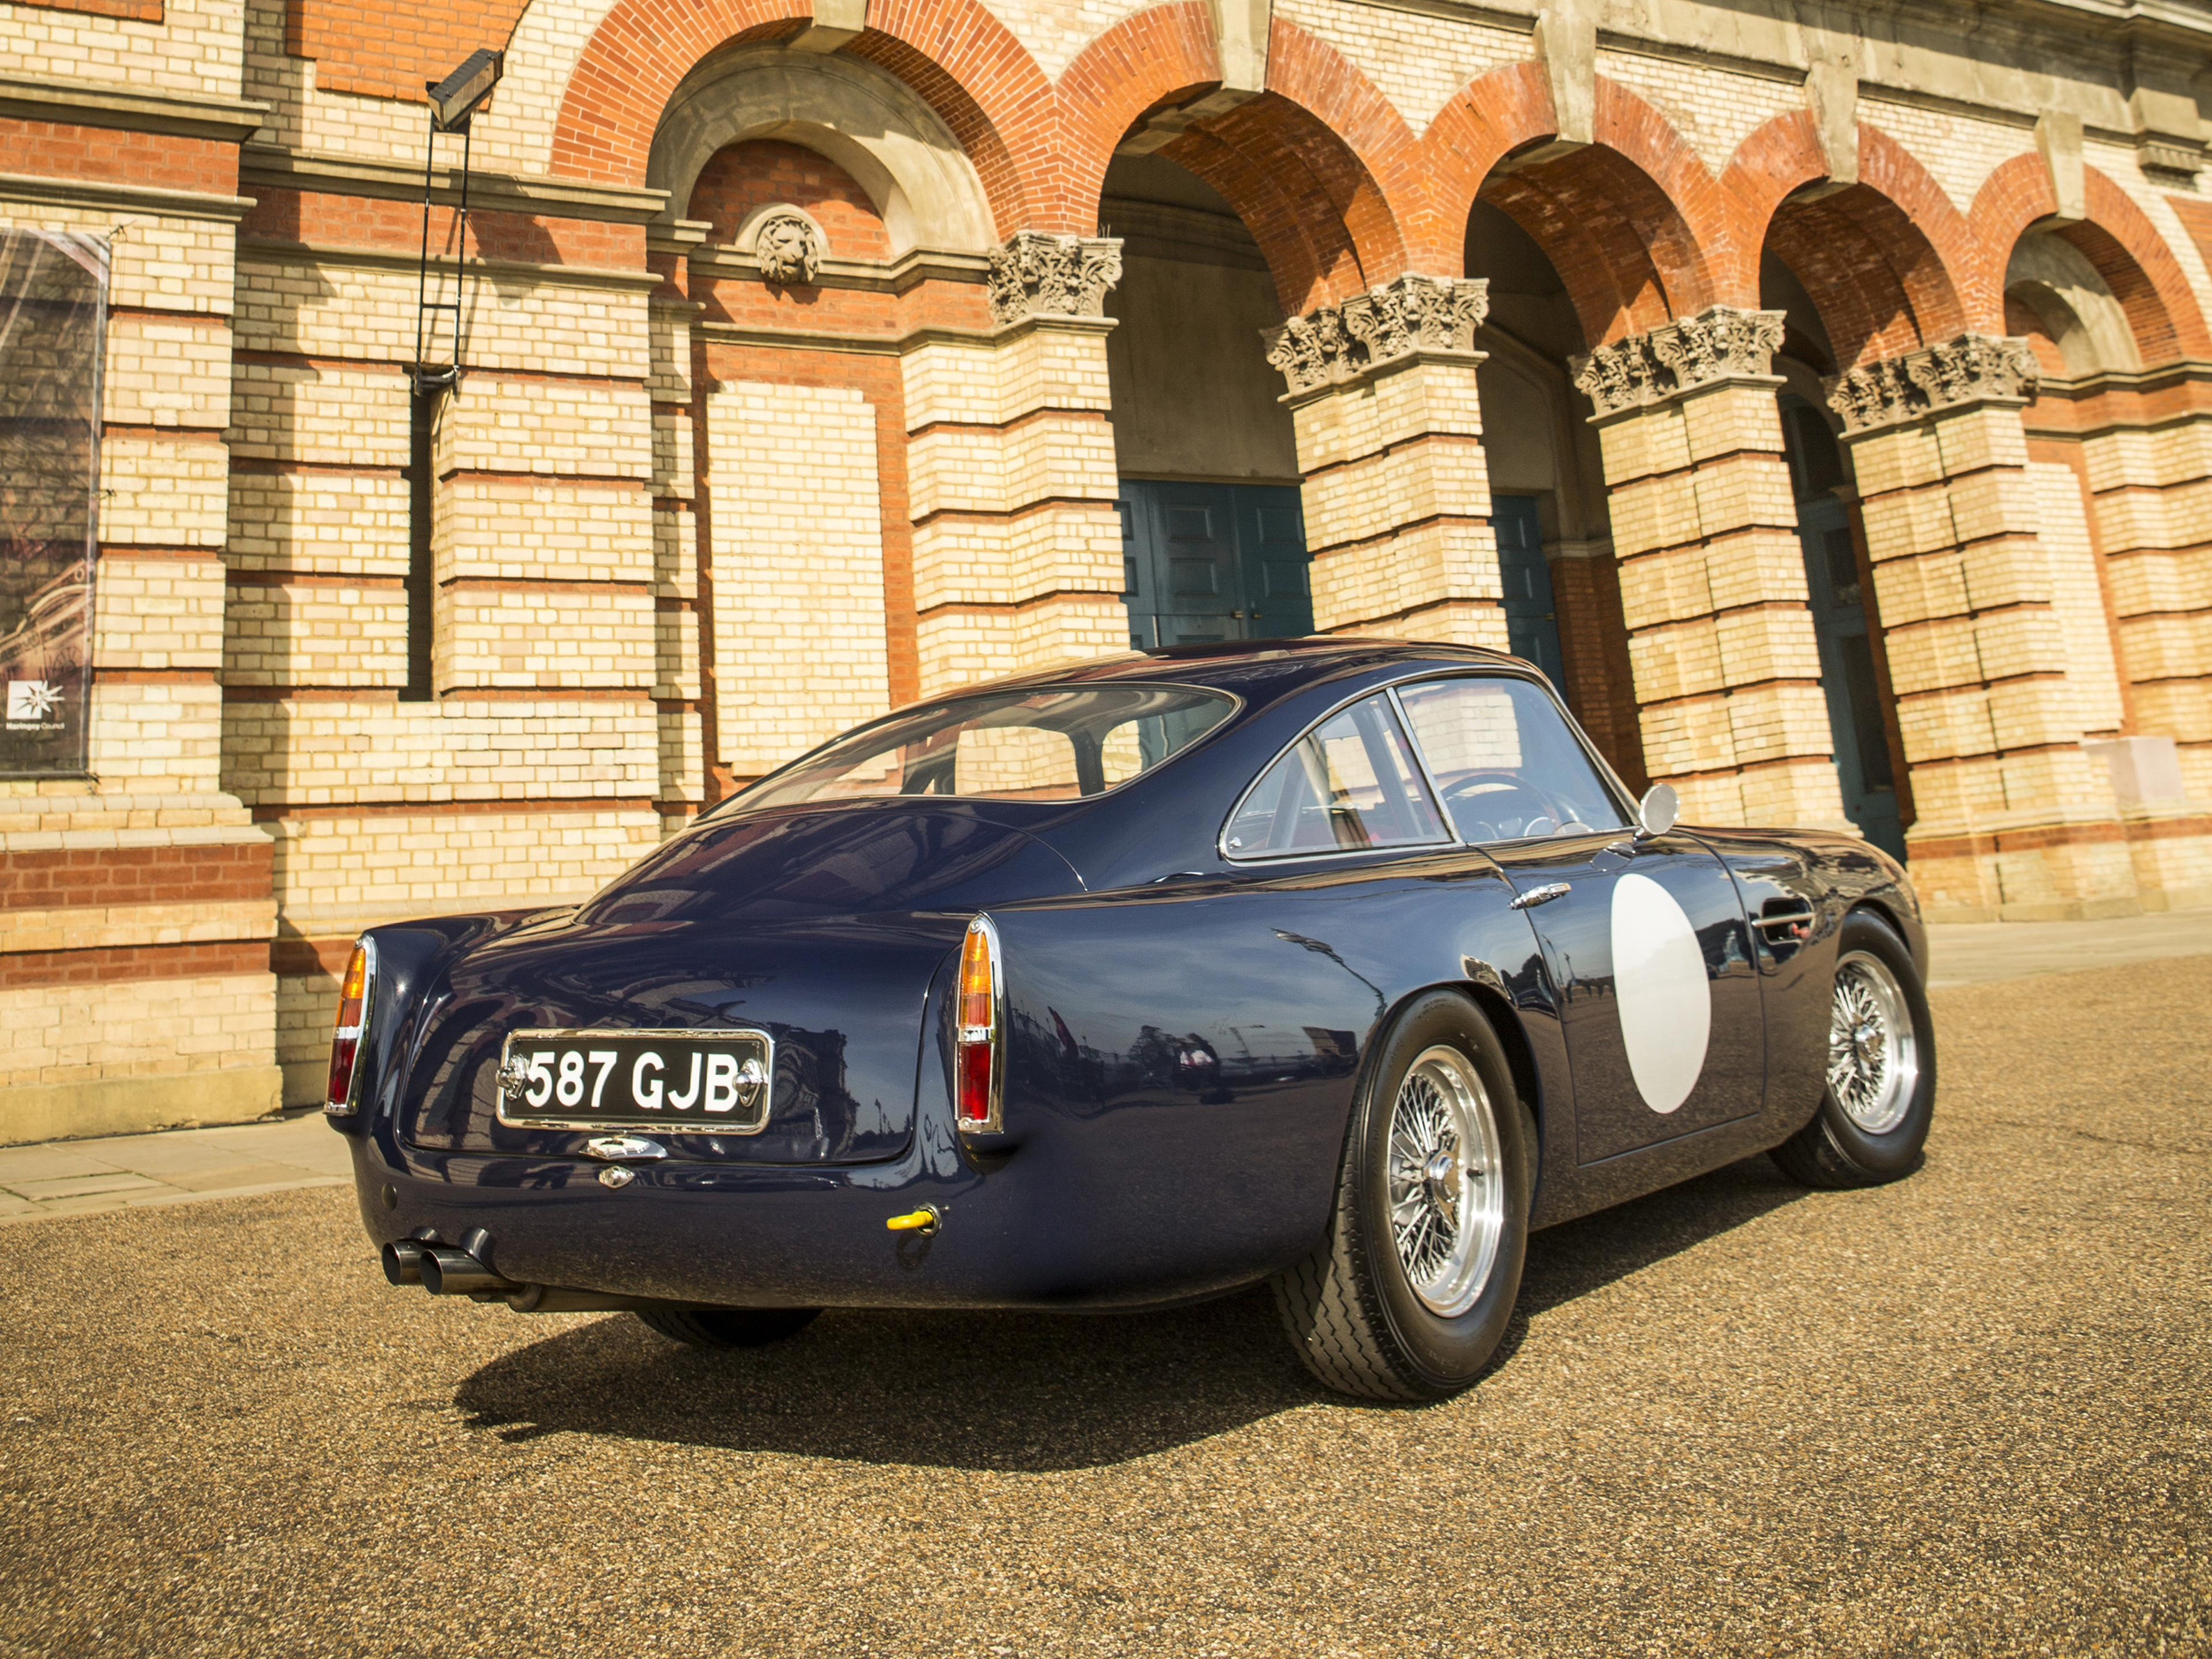 Classic Cars assemble at Alexandra Palace